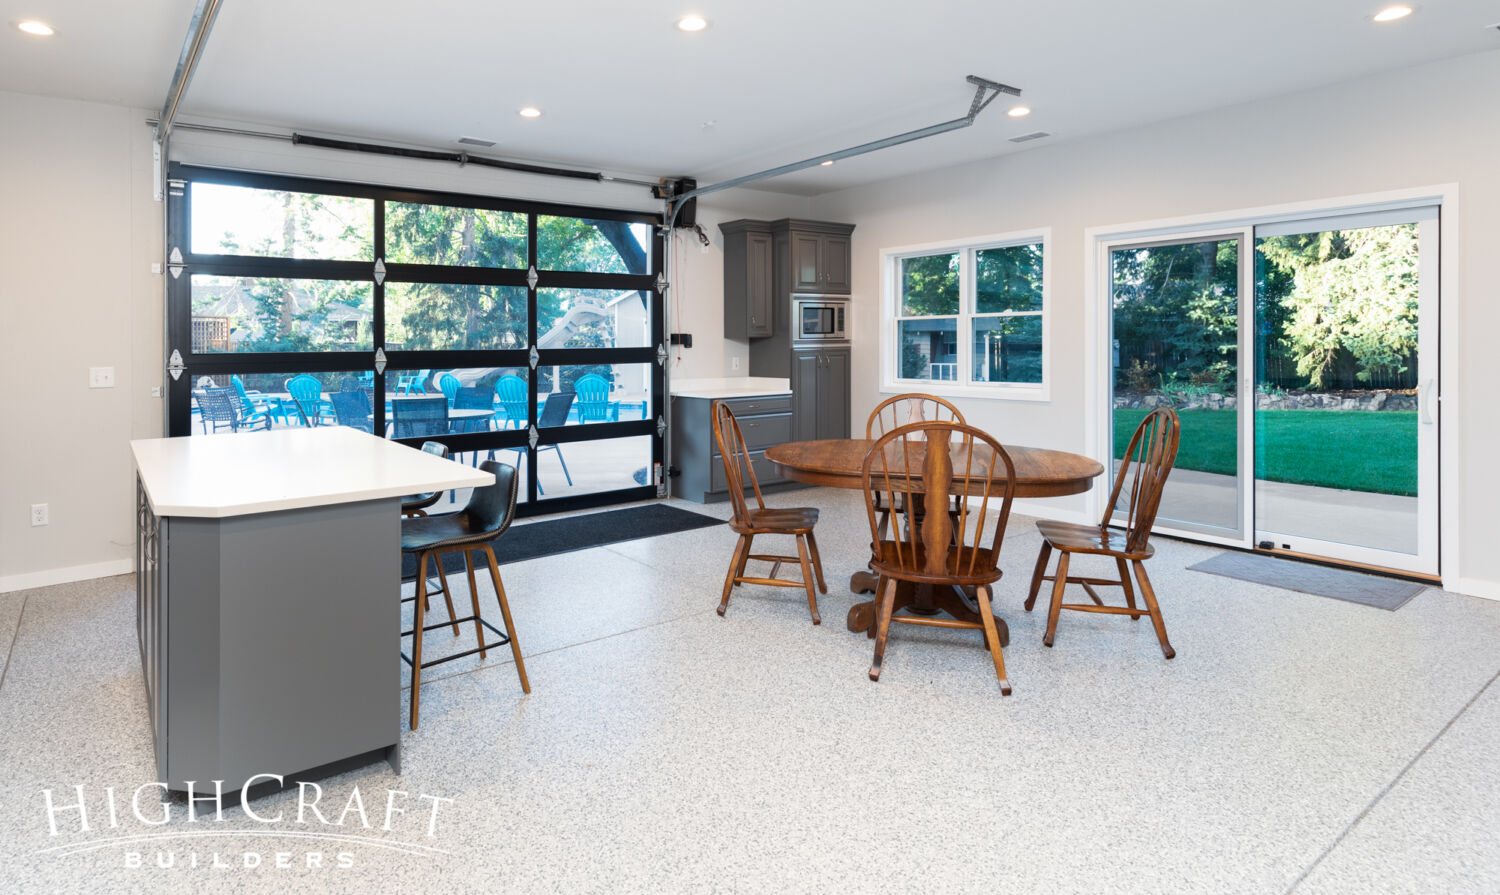 Kitchen-Bath-Pool-House-epoxy-flooring-glass-paneled-garage-door-living